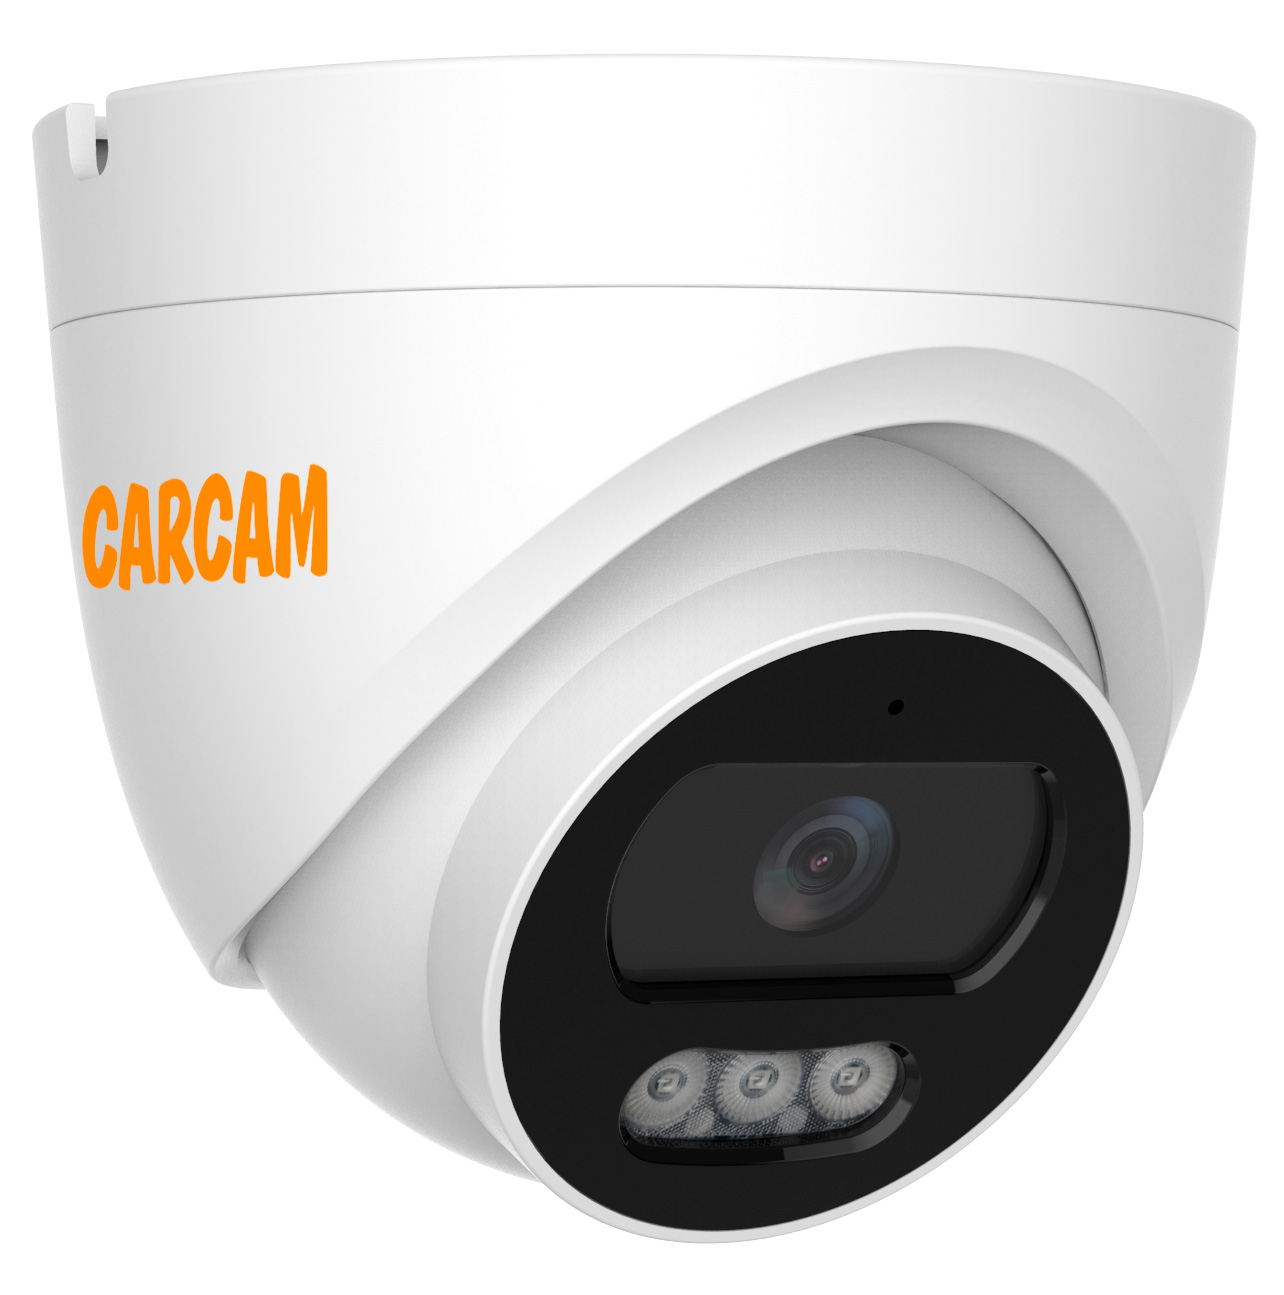 IP- CARCAM 4MP Dome IP Camera 4078M